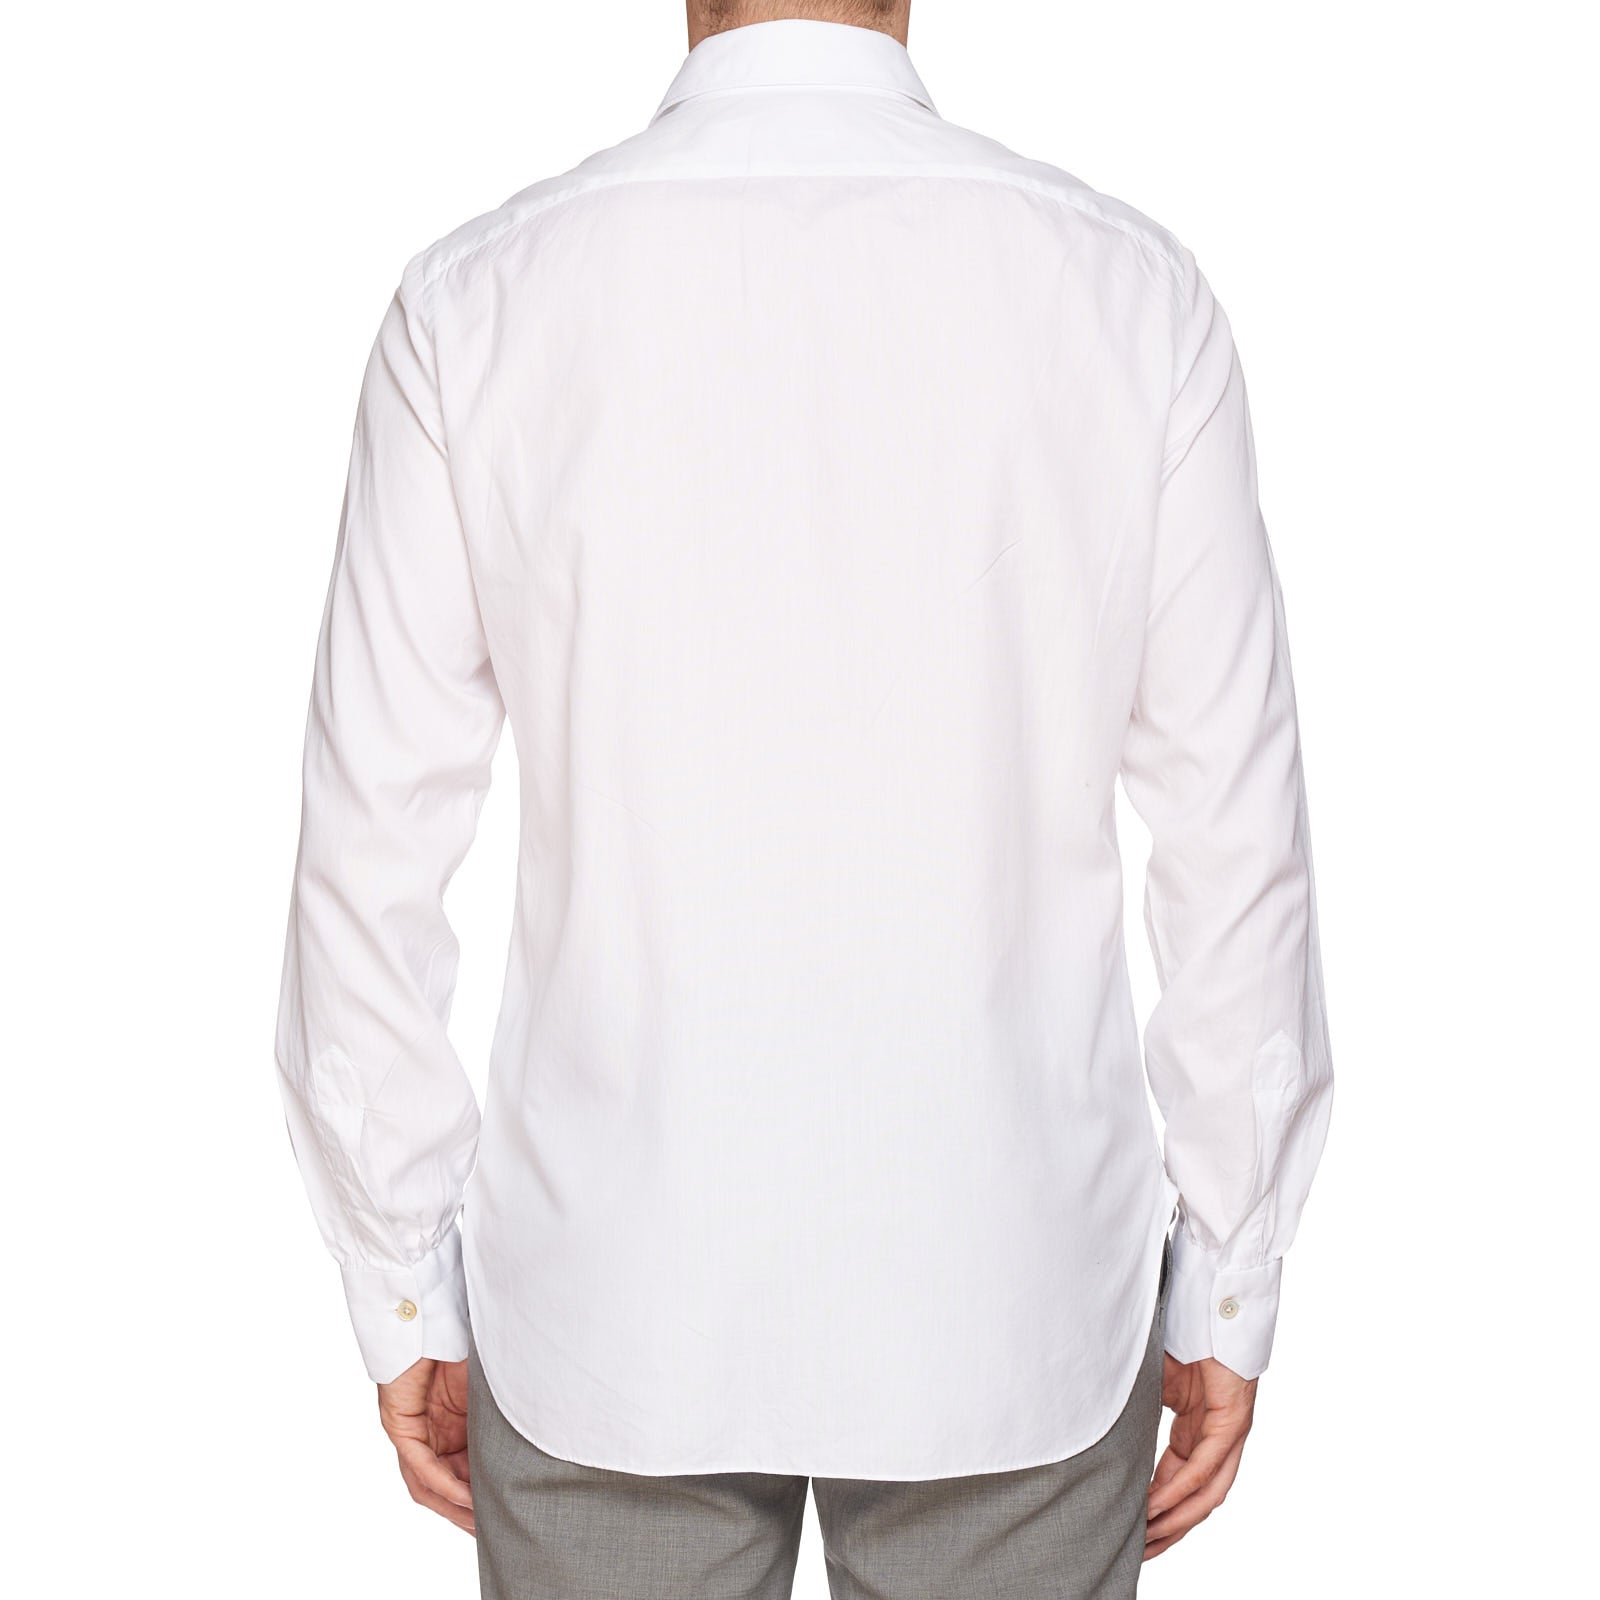 KITON Napoli Handmade Bespoke White Broadcloth Cotton Dress Shirt EU 39 US 15.5 KITON